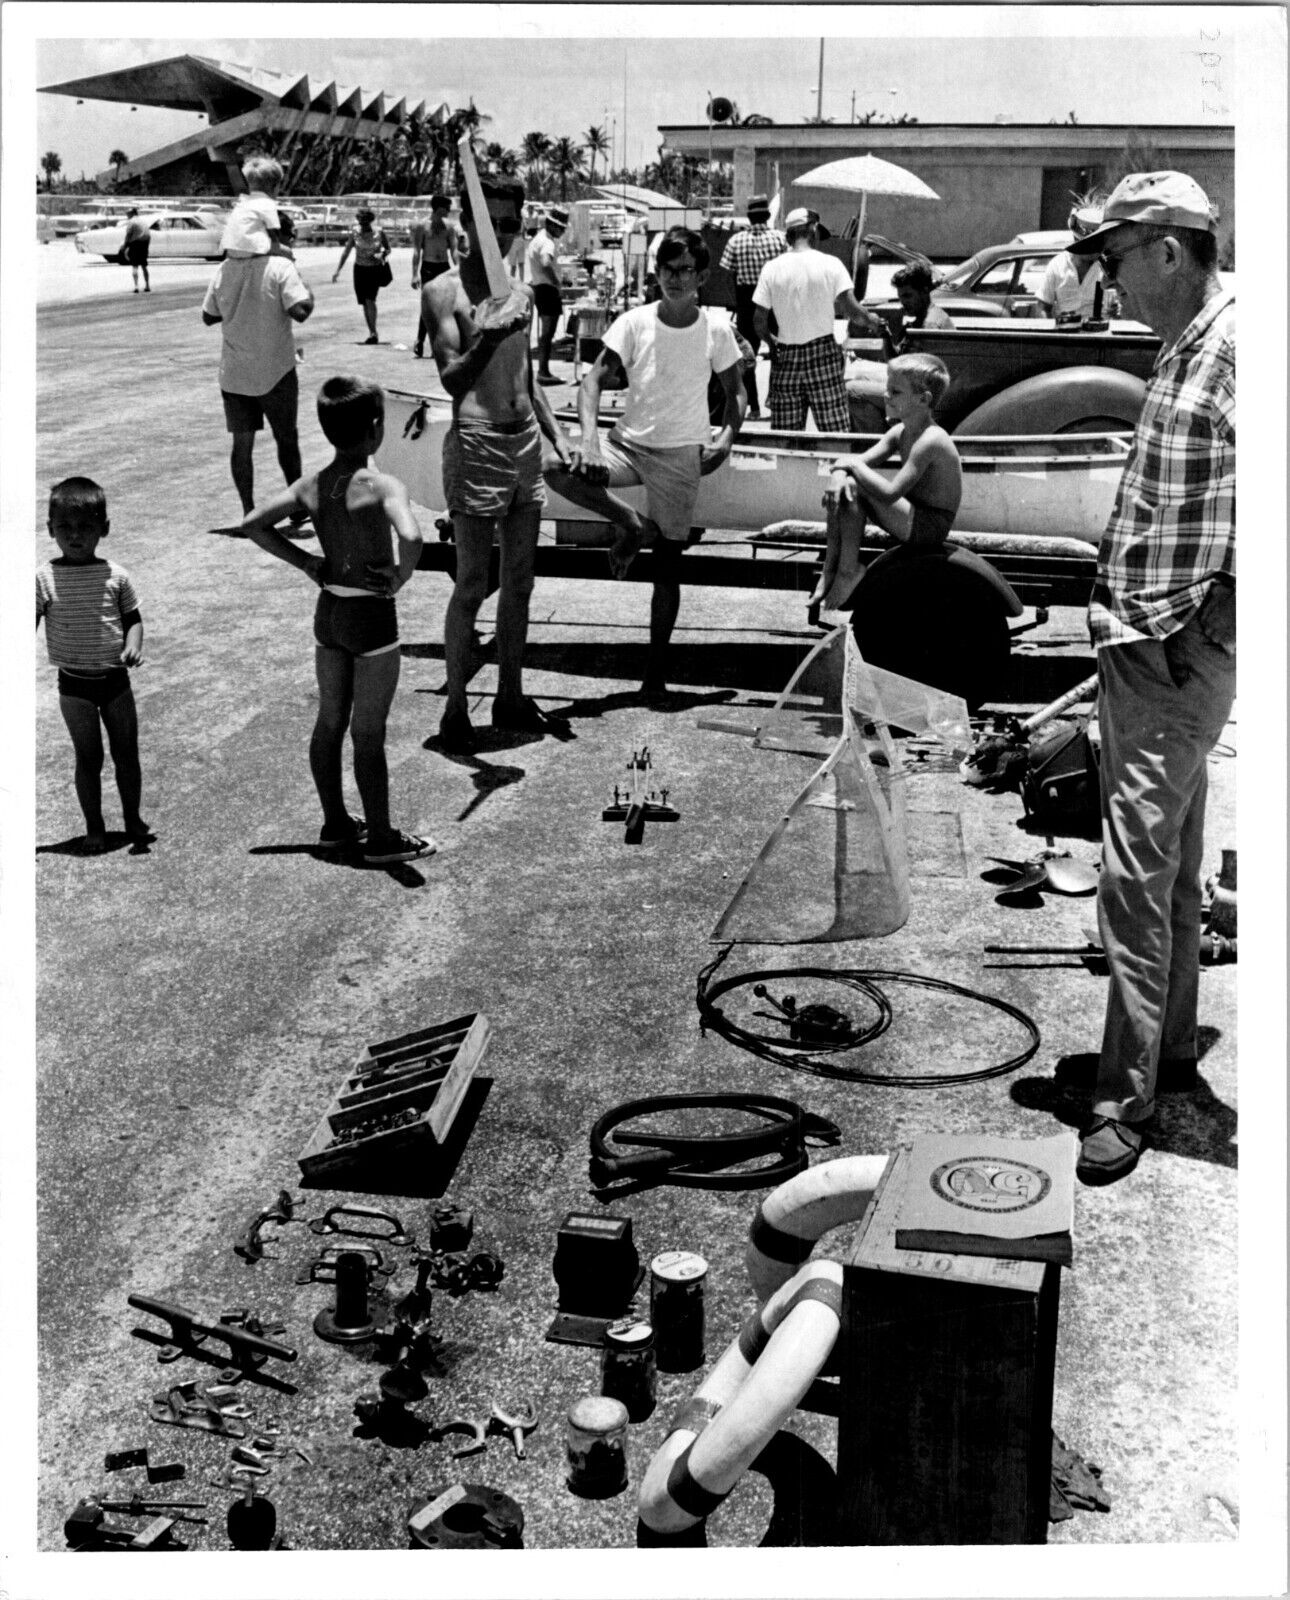 1967 Flea Market set up at Miami Marine stadium Florida 8x10 PRESS PHOTO